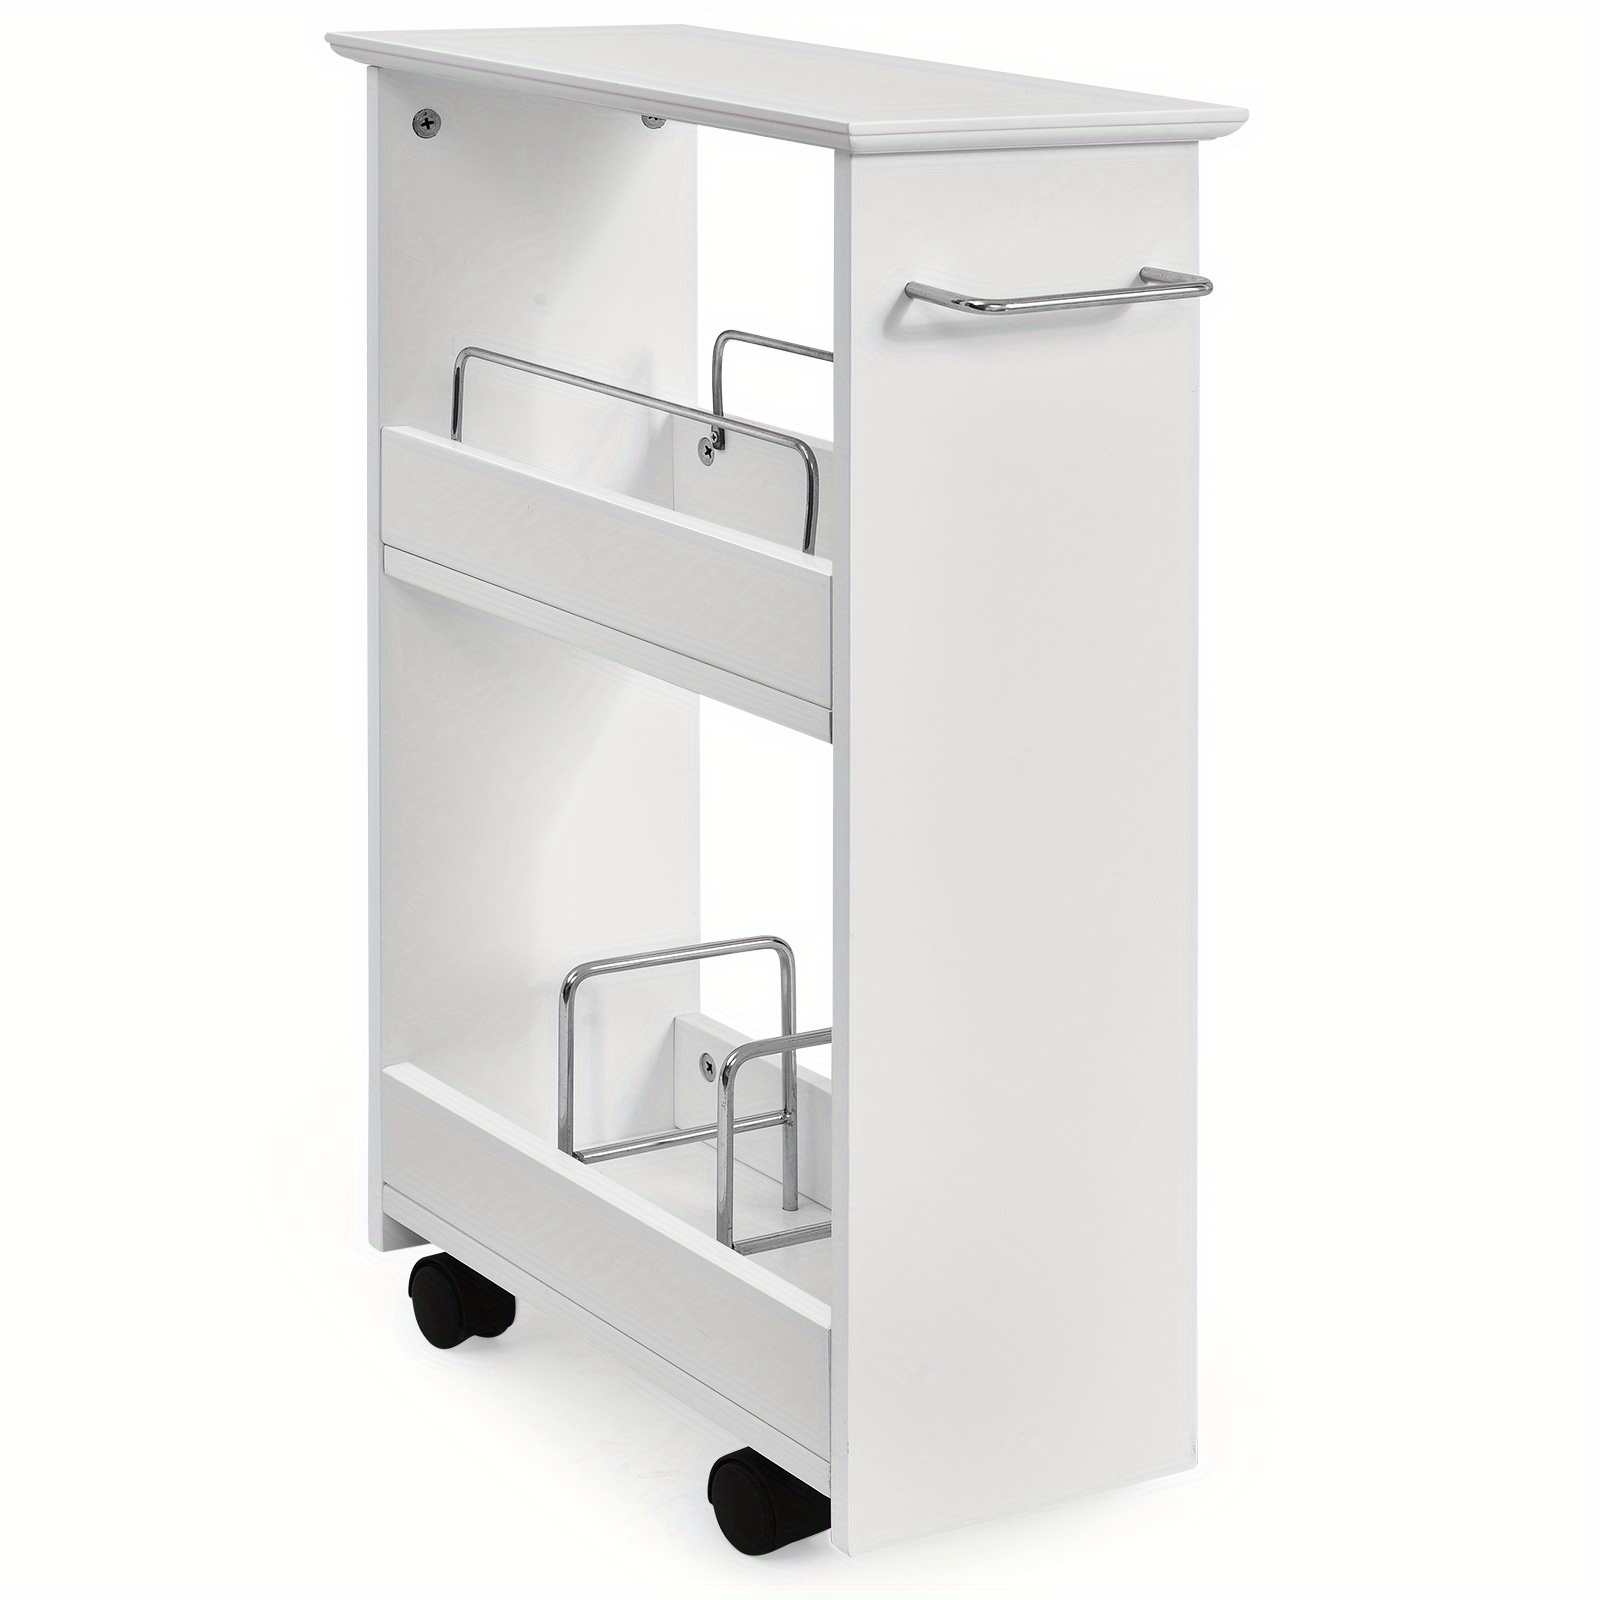 

Lifezeal Slim Rolling Storage Cart 3-tier Bathroom Cabinet Mobile Shelving Unit W/ Handle